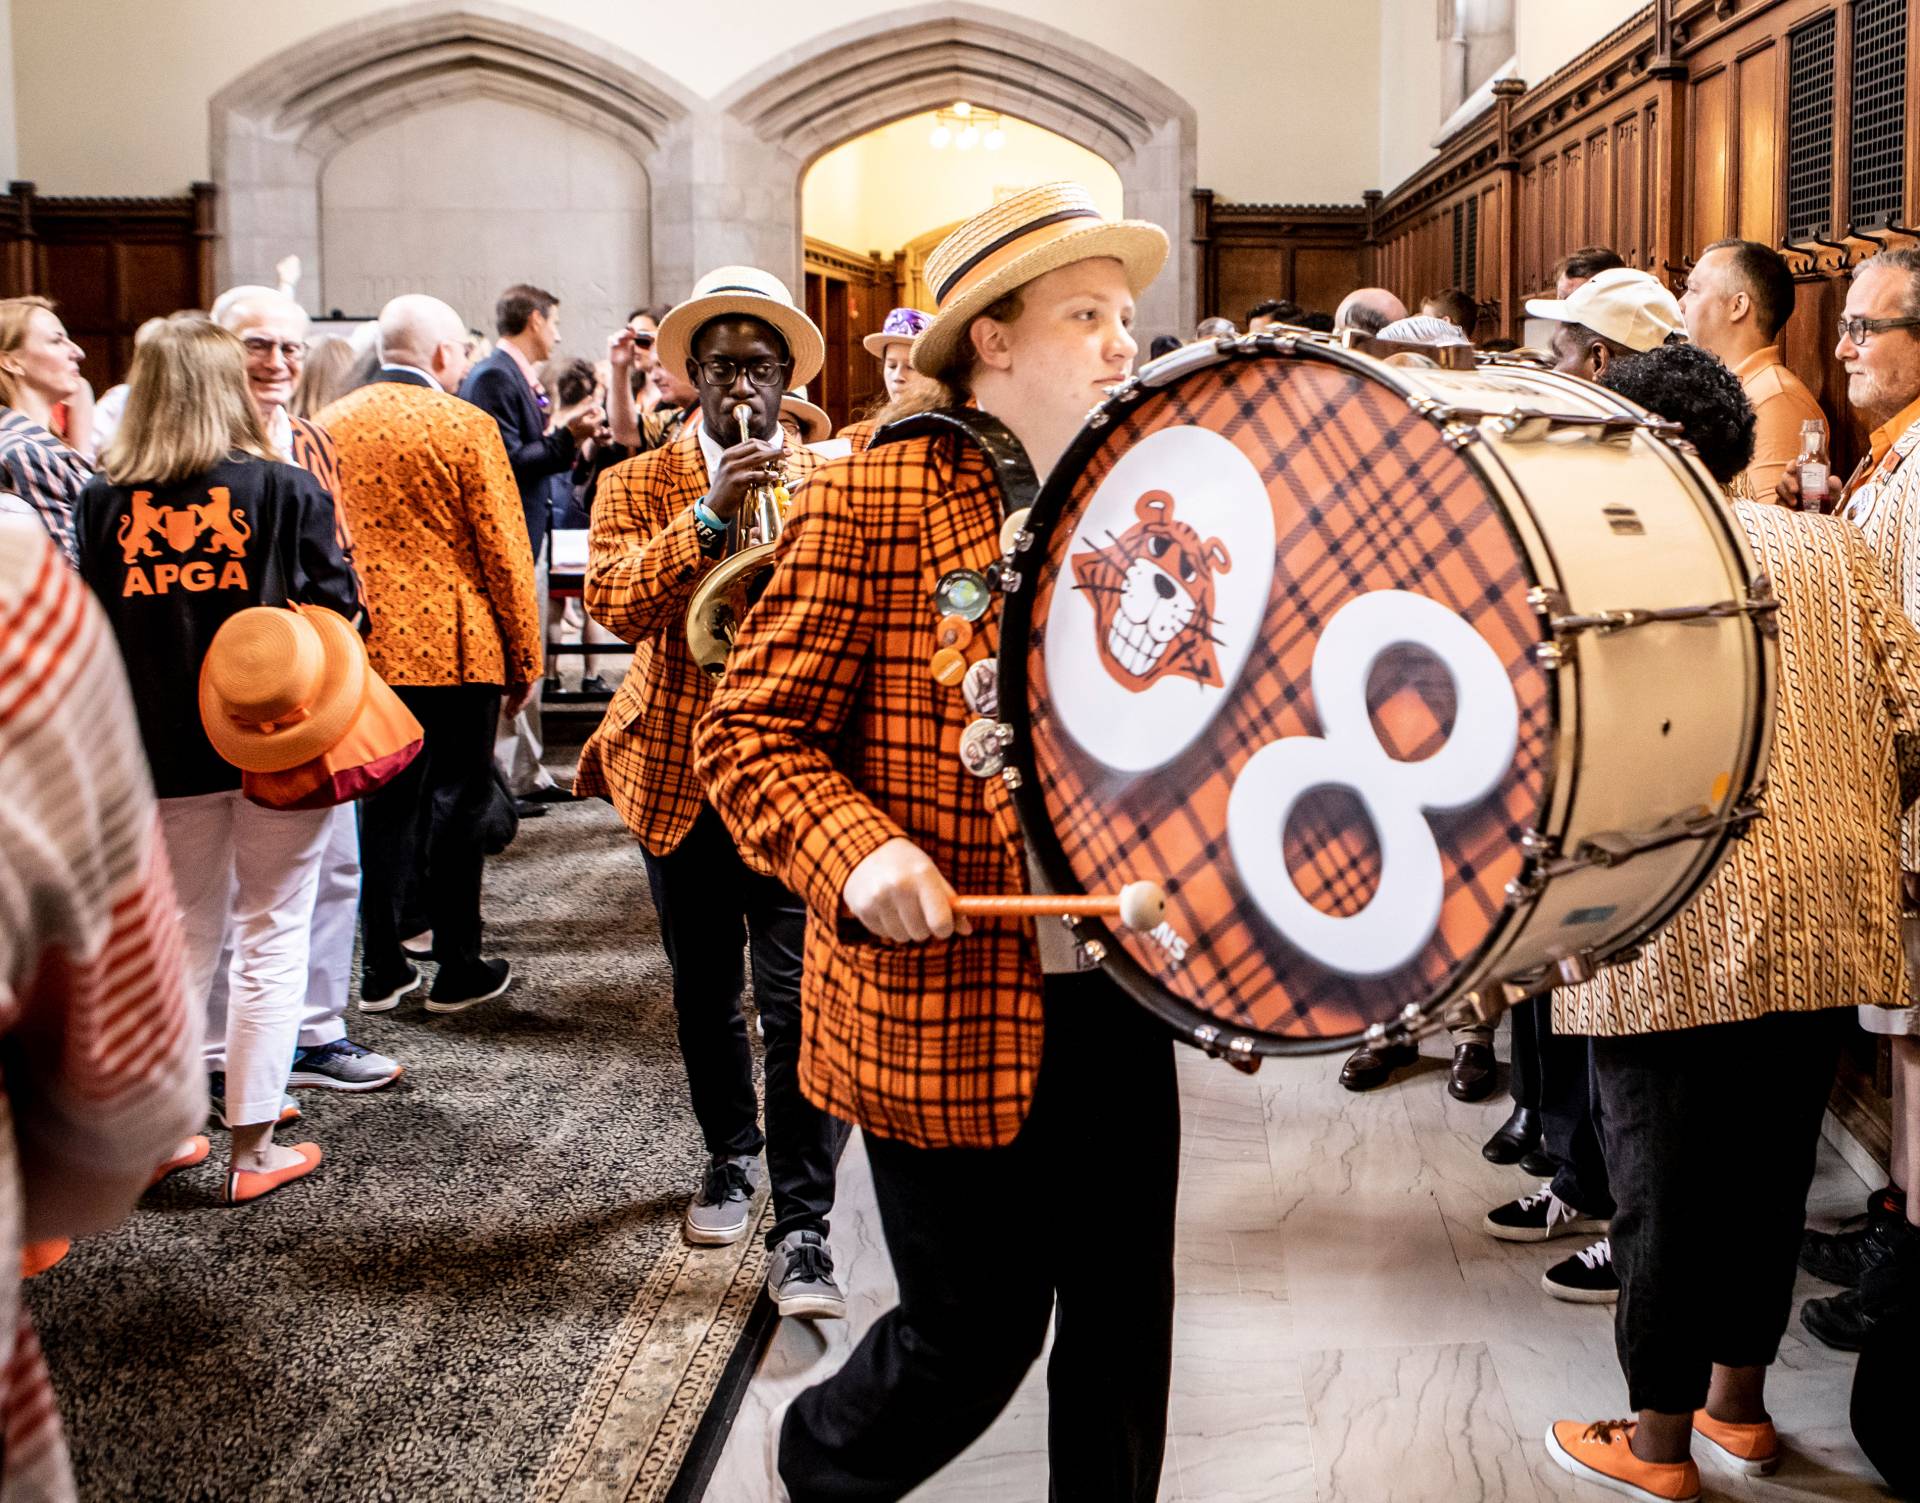 The Princeton University Band plays